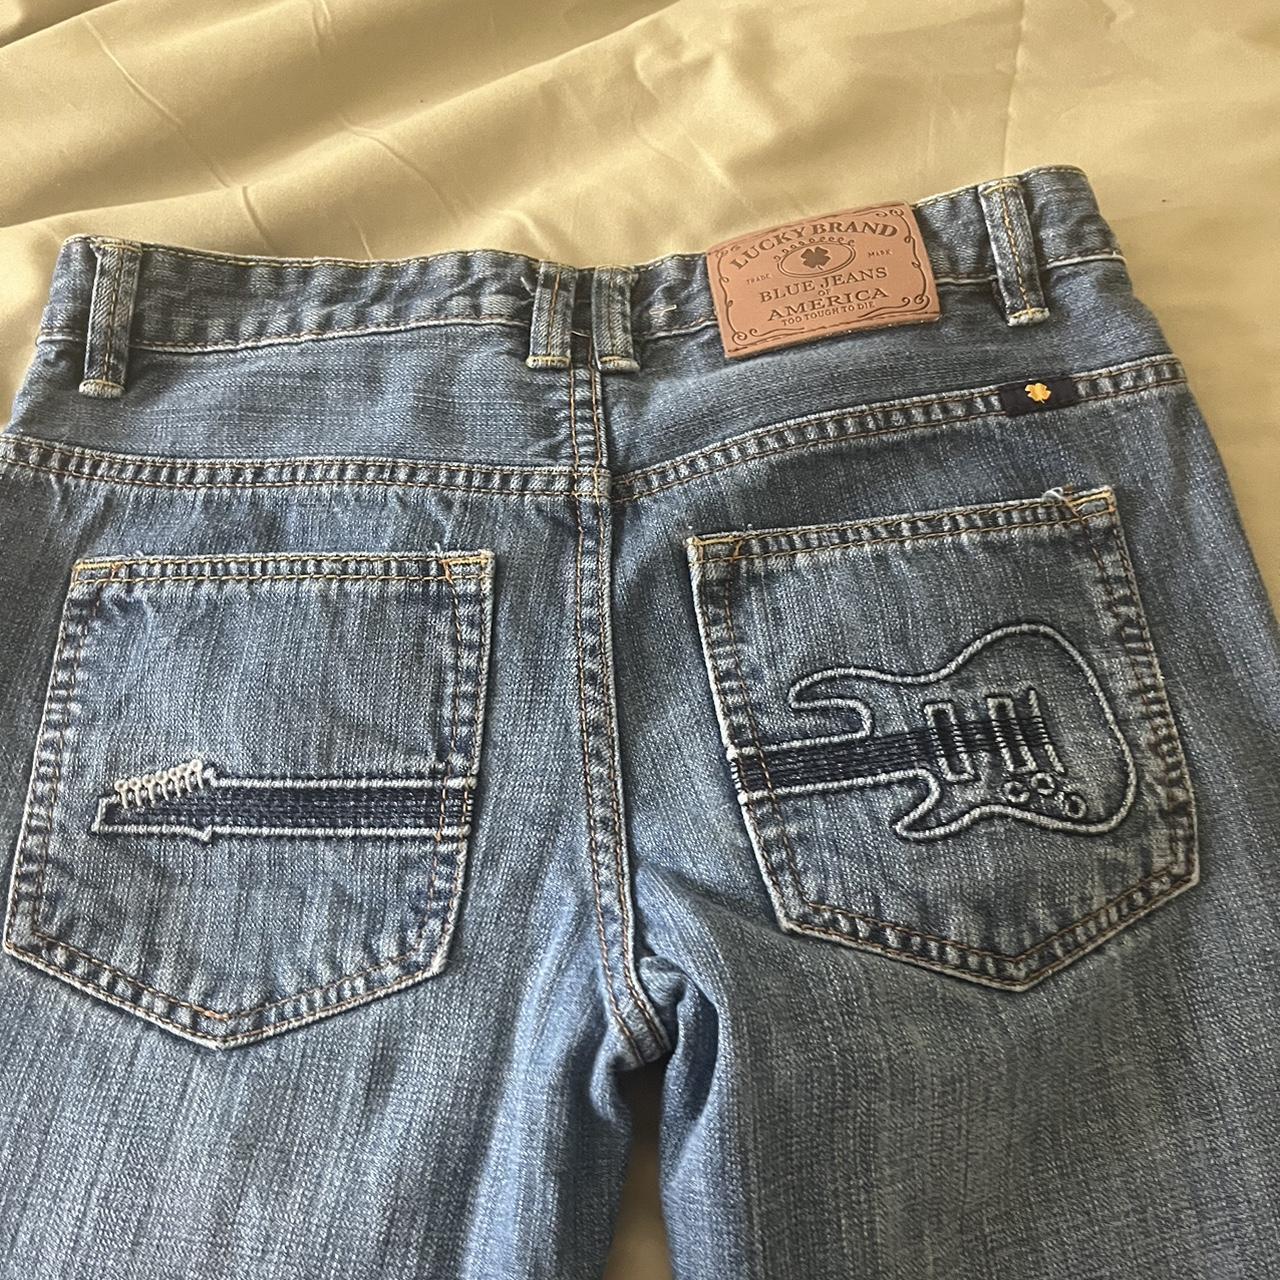 Cute jeans - Depop